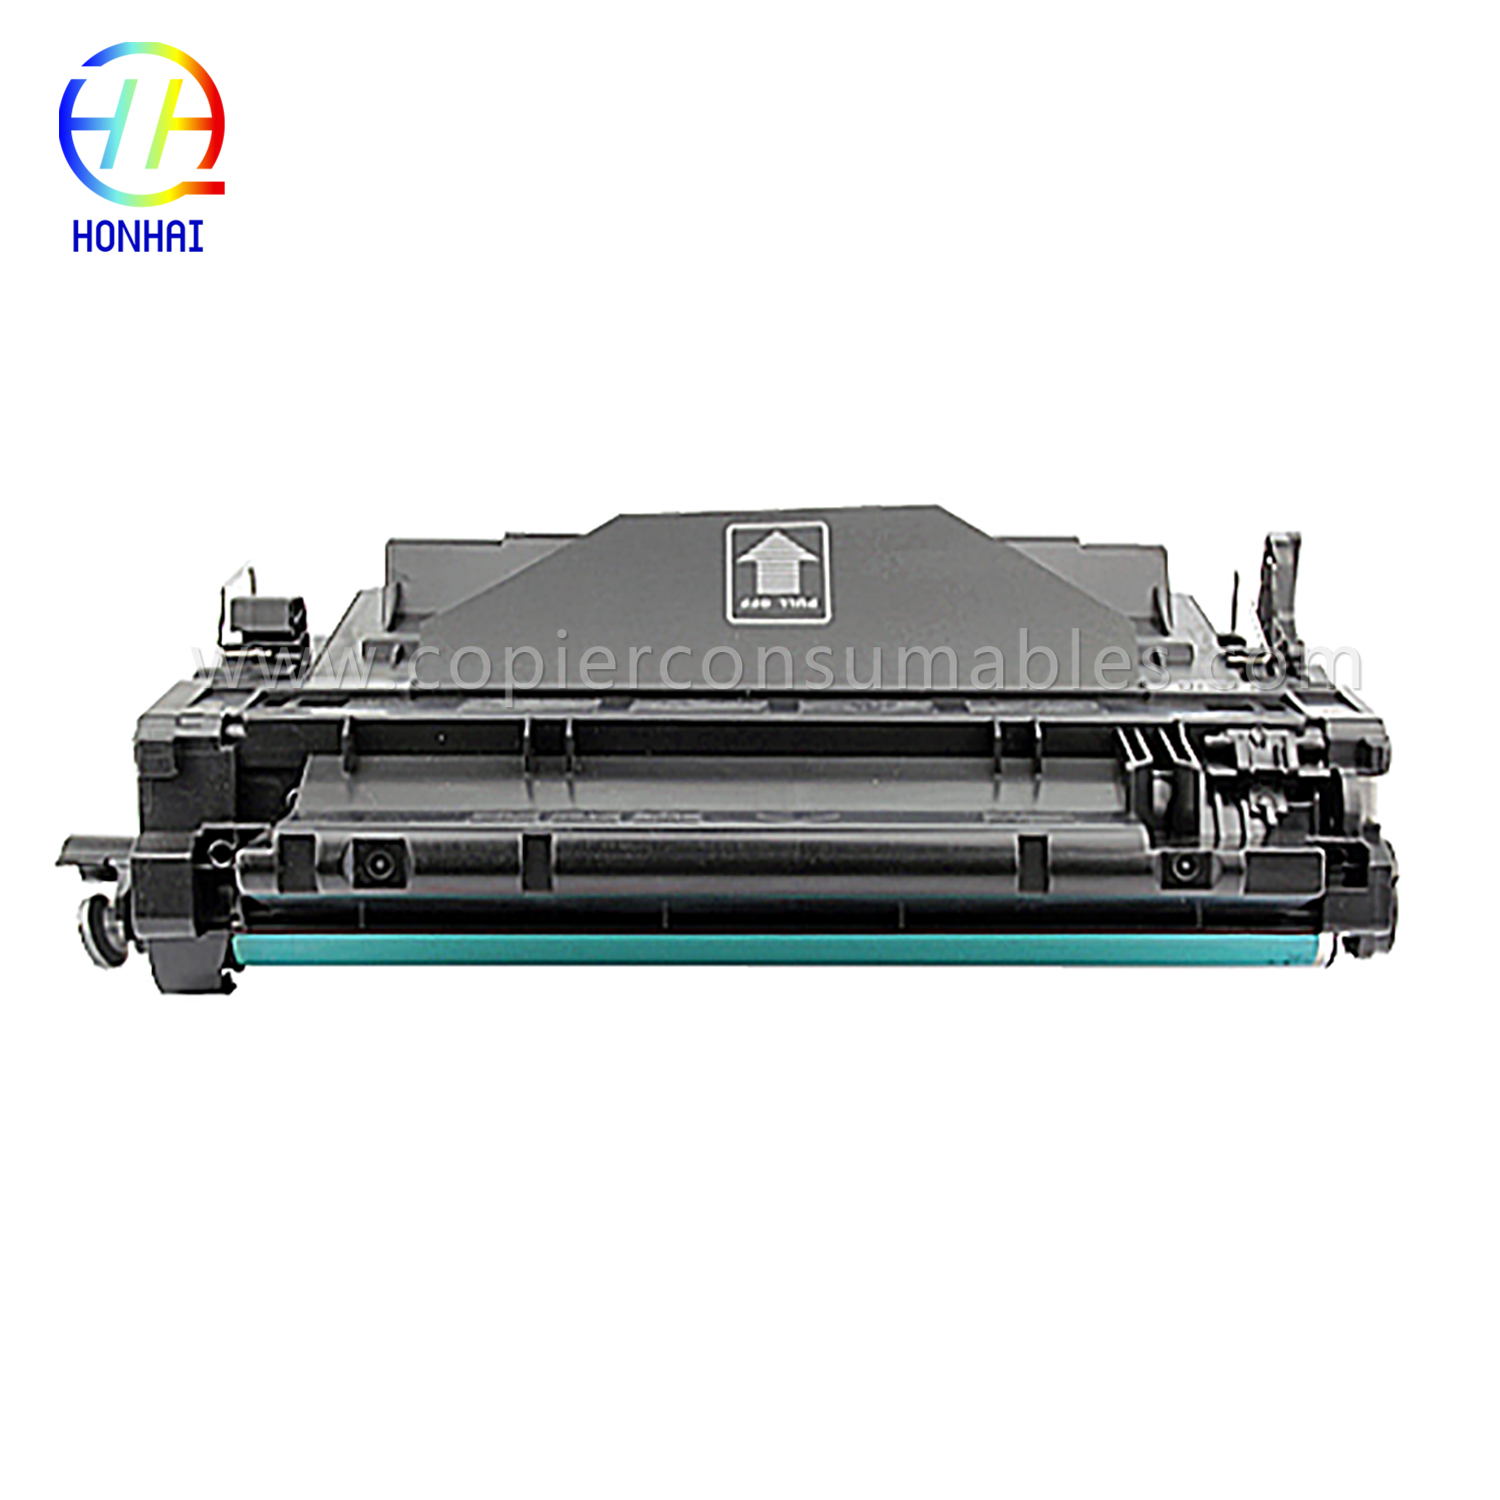 Wkłady z tonerem kolorowym HP LaserJet LaserJet Pro MFP M521dn Enterprise P3015 (CE255X) -1 (1) Kup